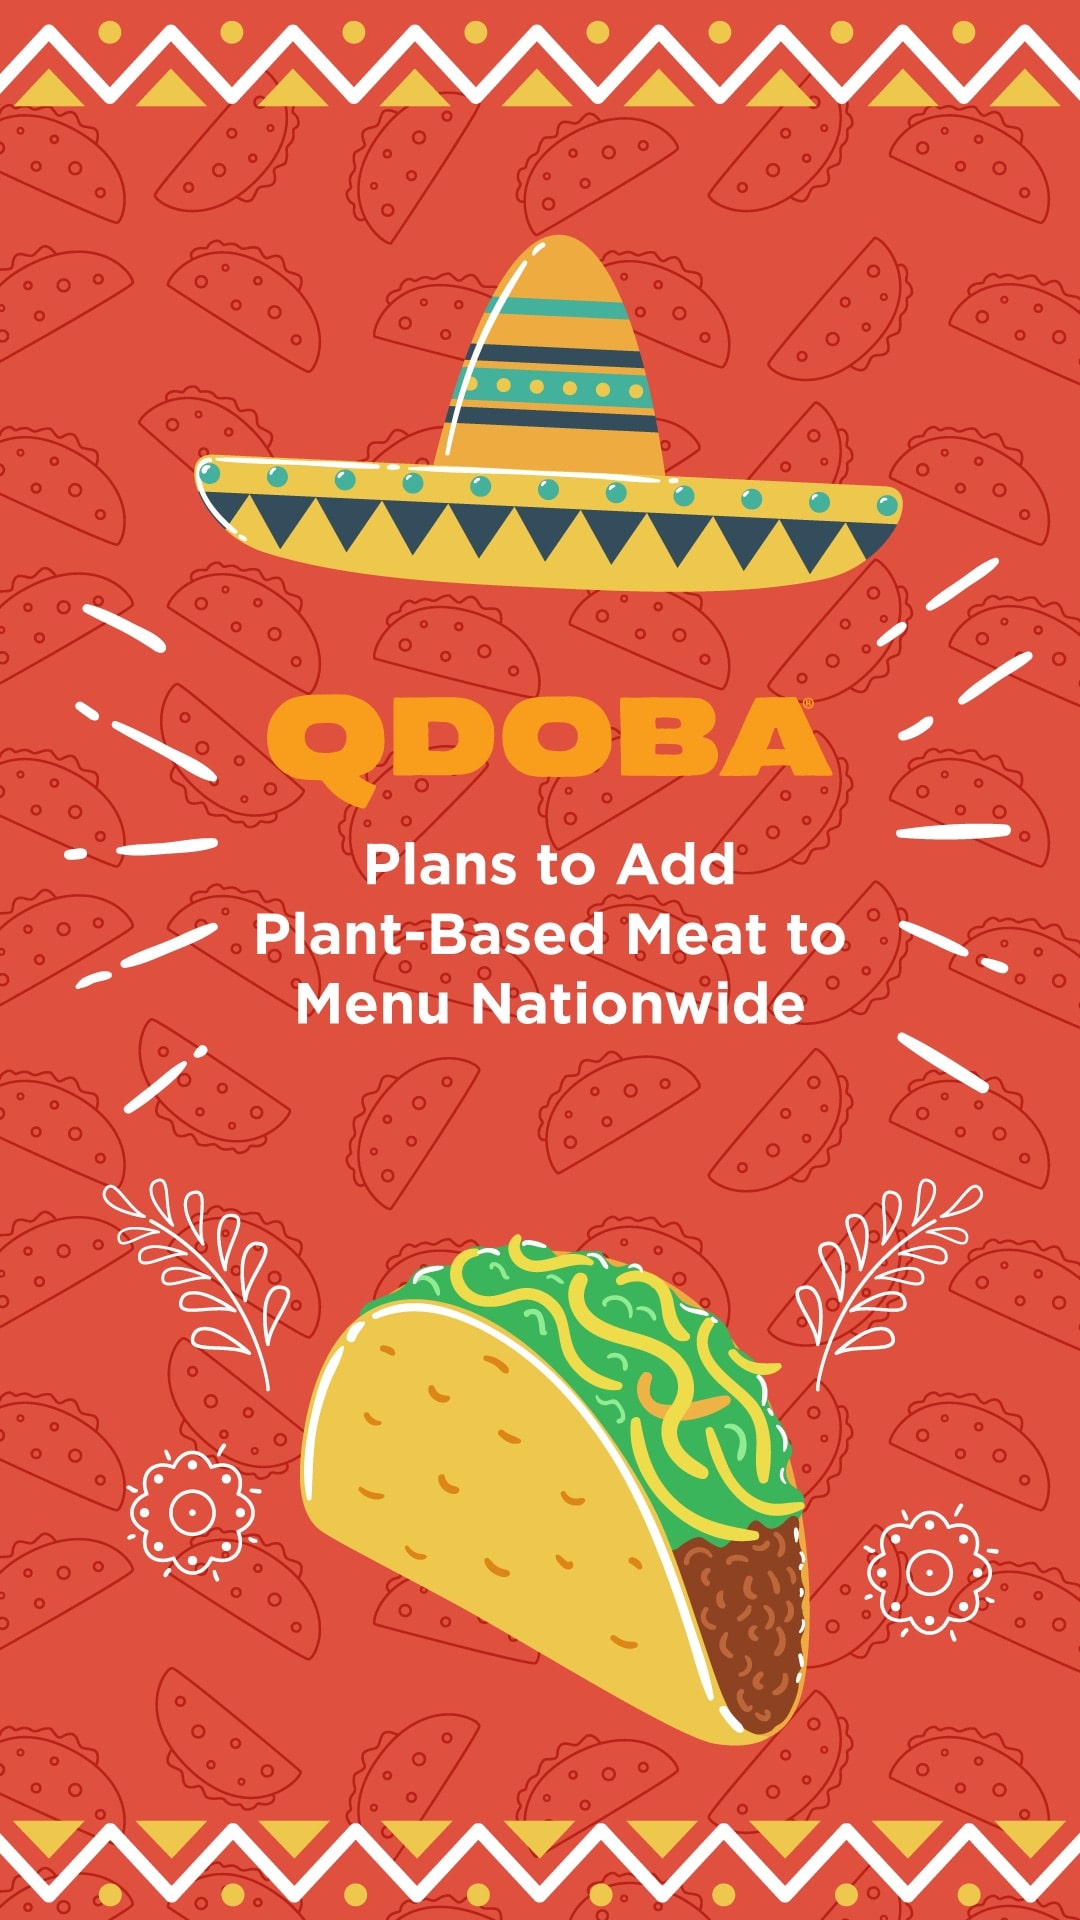 Qdoba Plans to Add Plant-Based Meat to Menu Nationwide - ChooseVeg